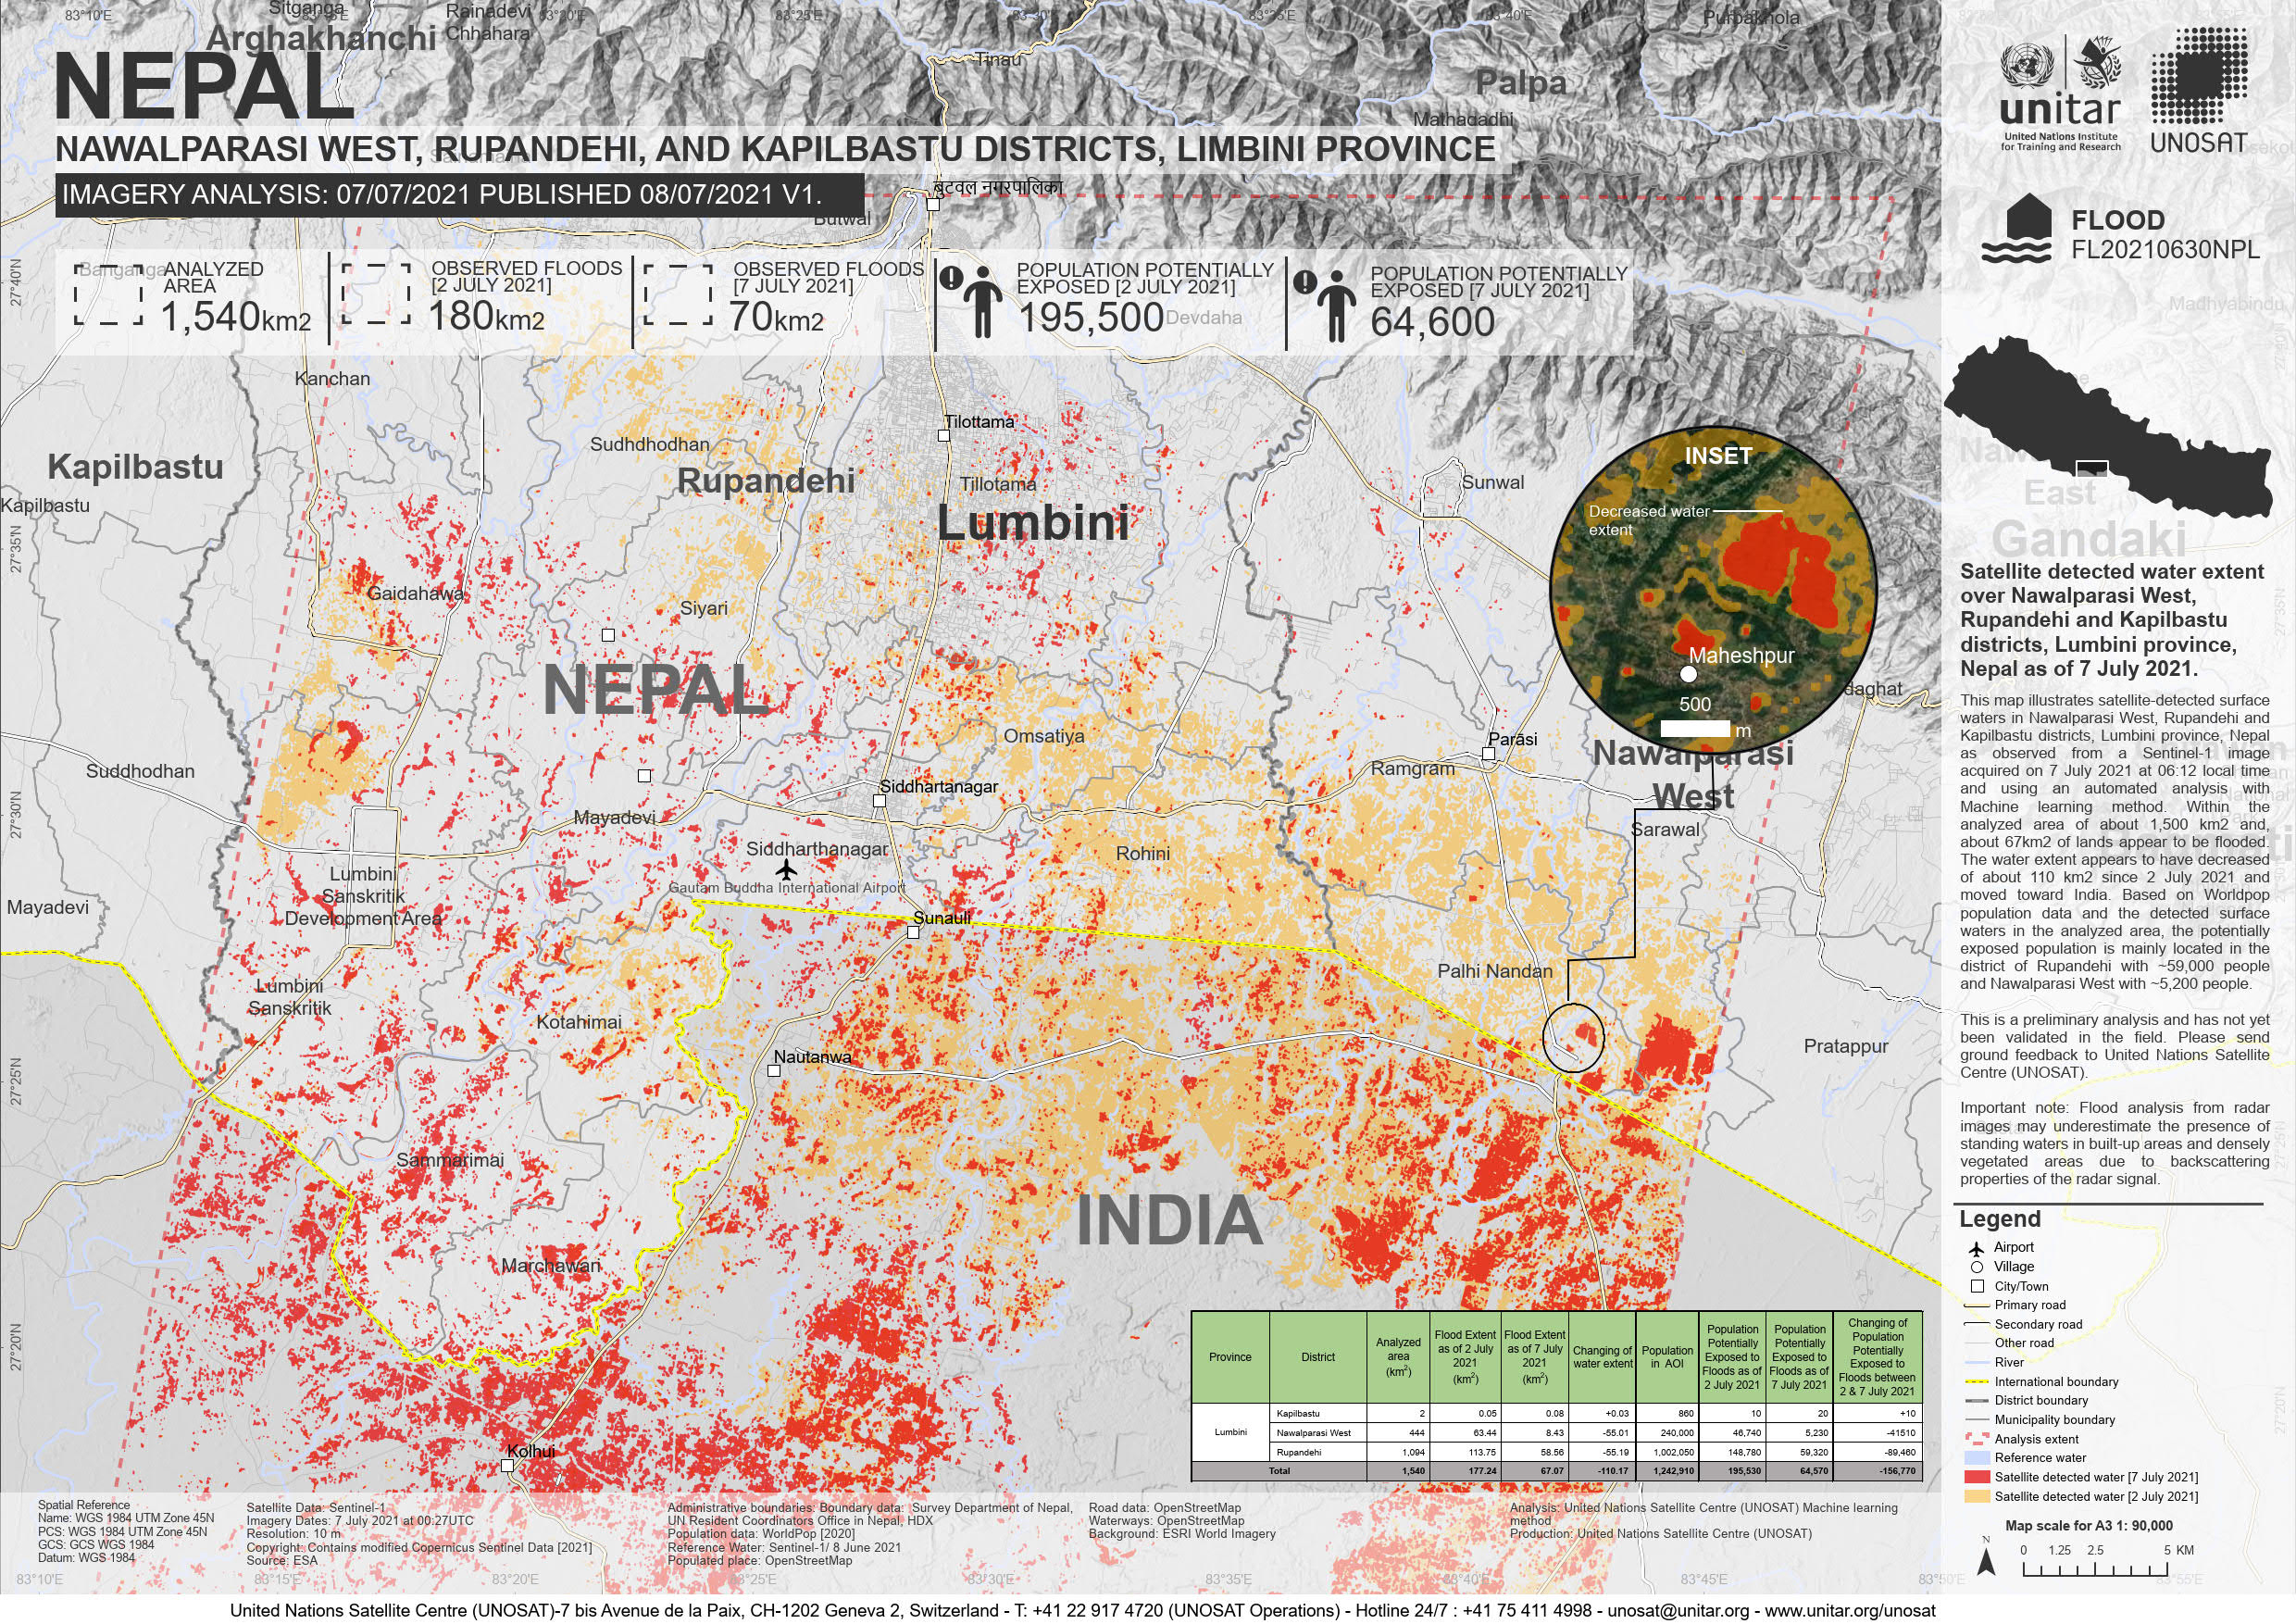 Satellite Detected Water Extent Over Nawalparasi West, Rupandehi And Kapilbastu Districts, Nepal As Of 7 July 2021